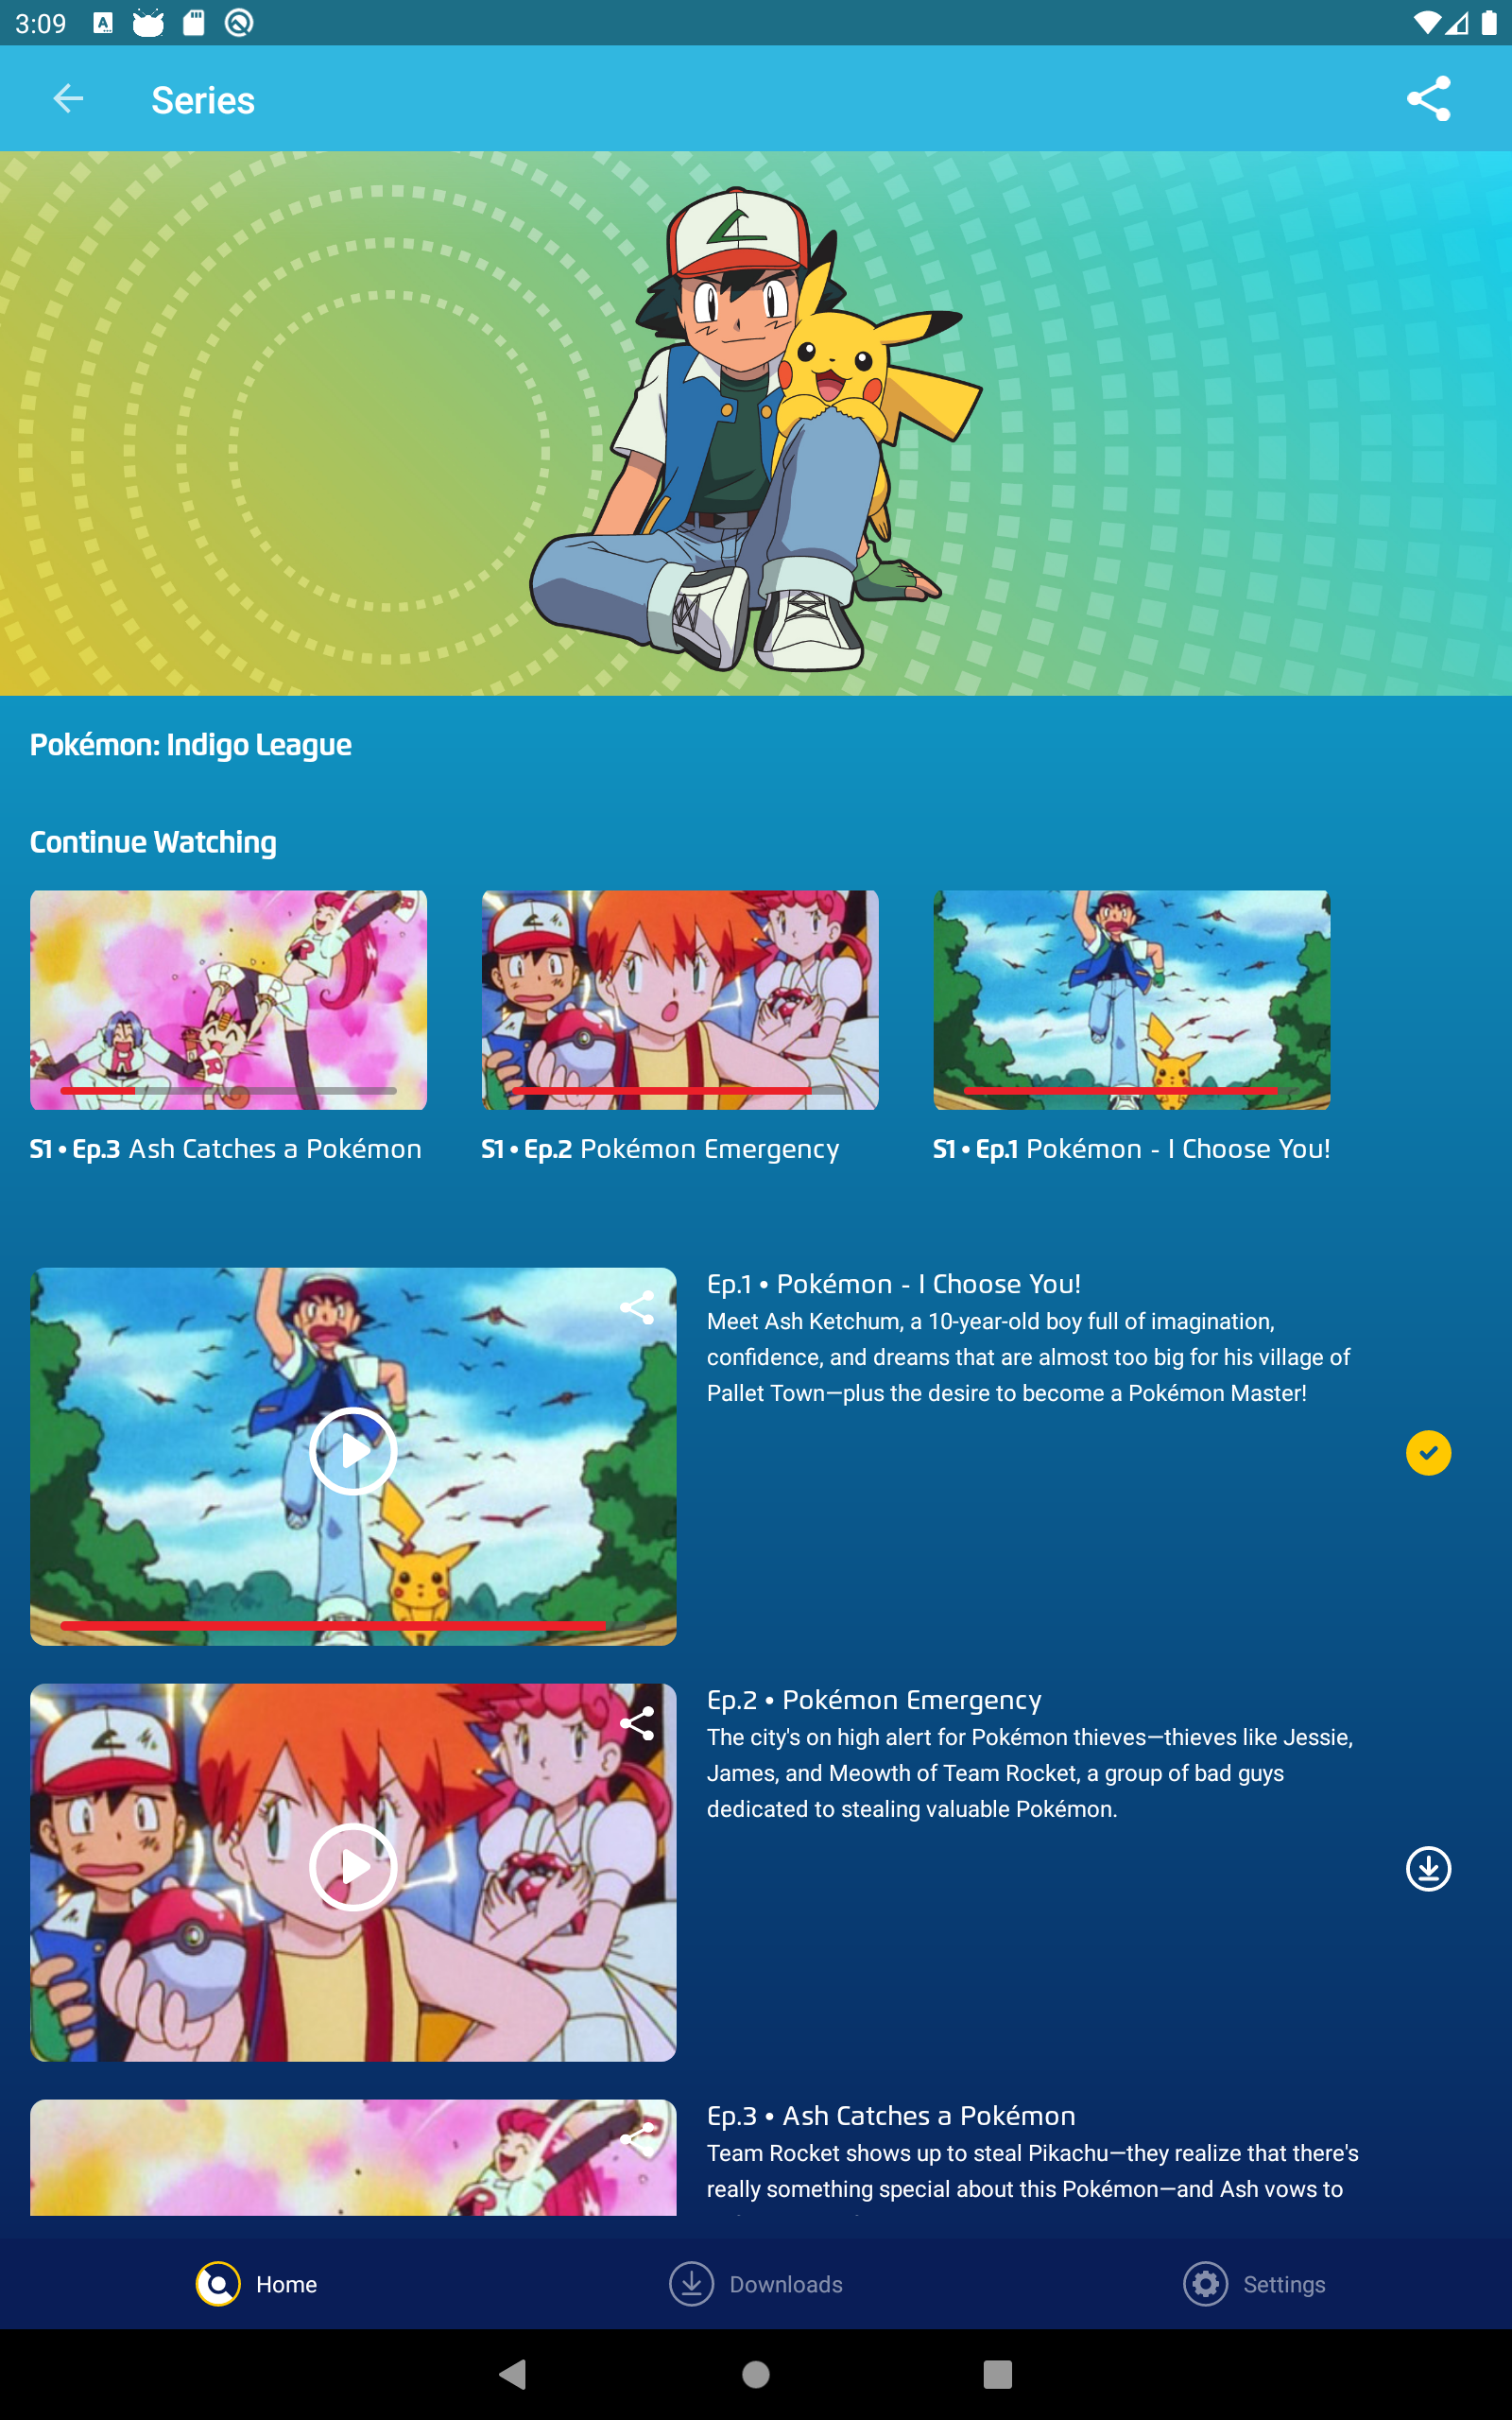 Pokémon TV App